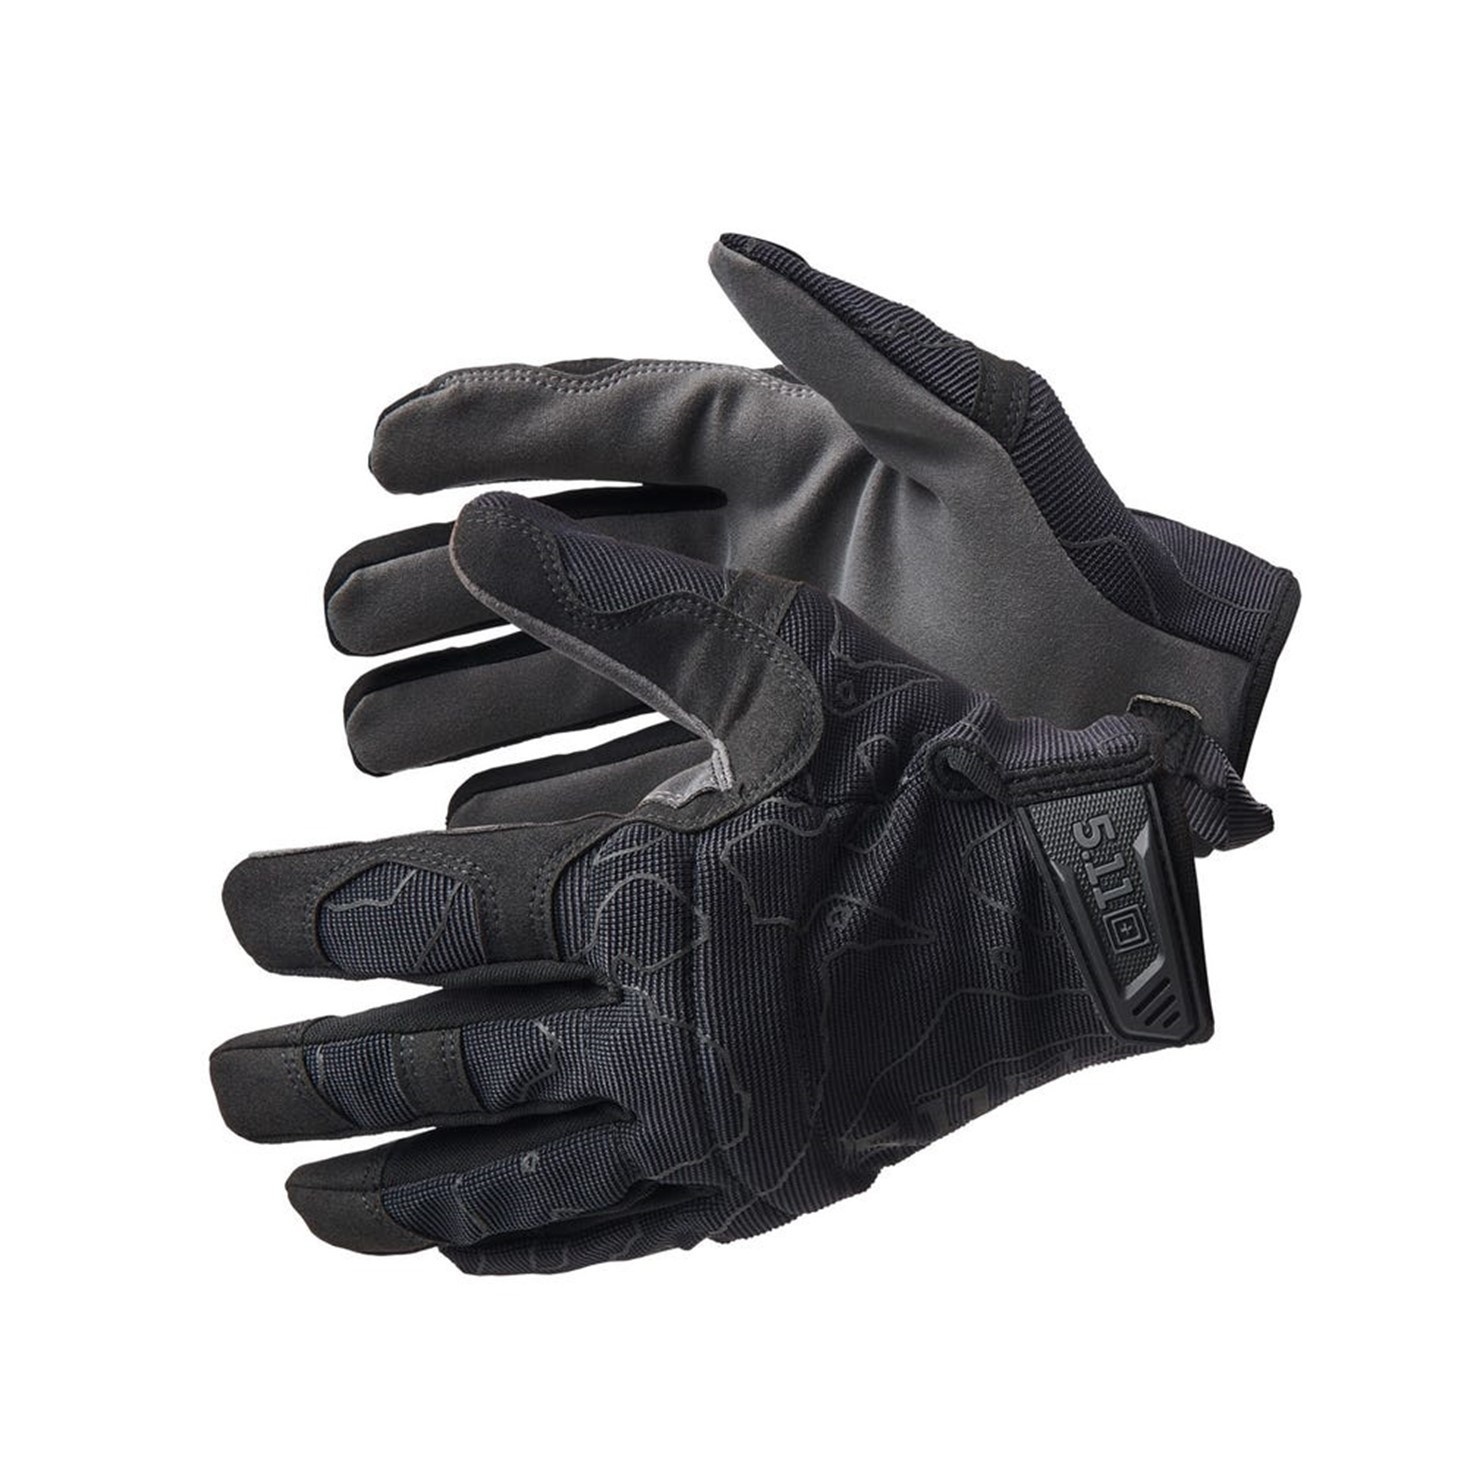 5.11 Tactical High Abrasion Glove 2.0